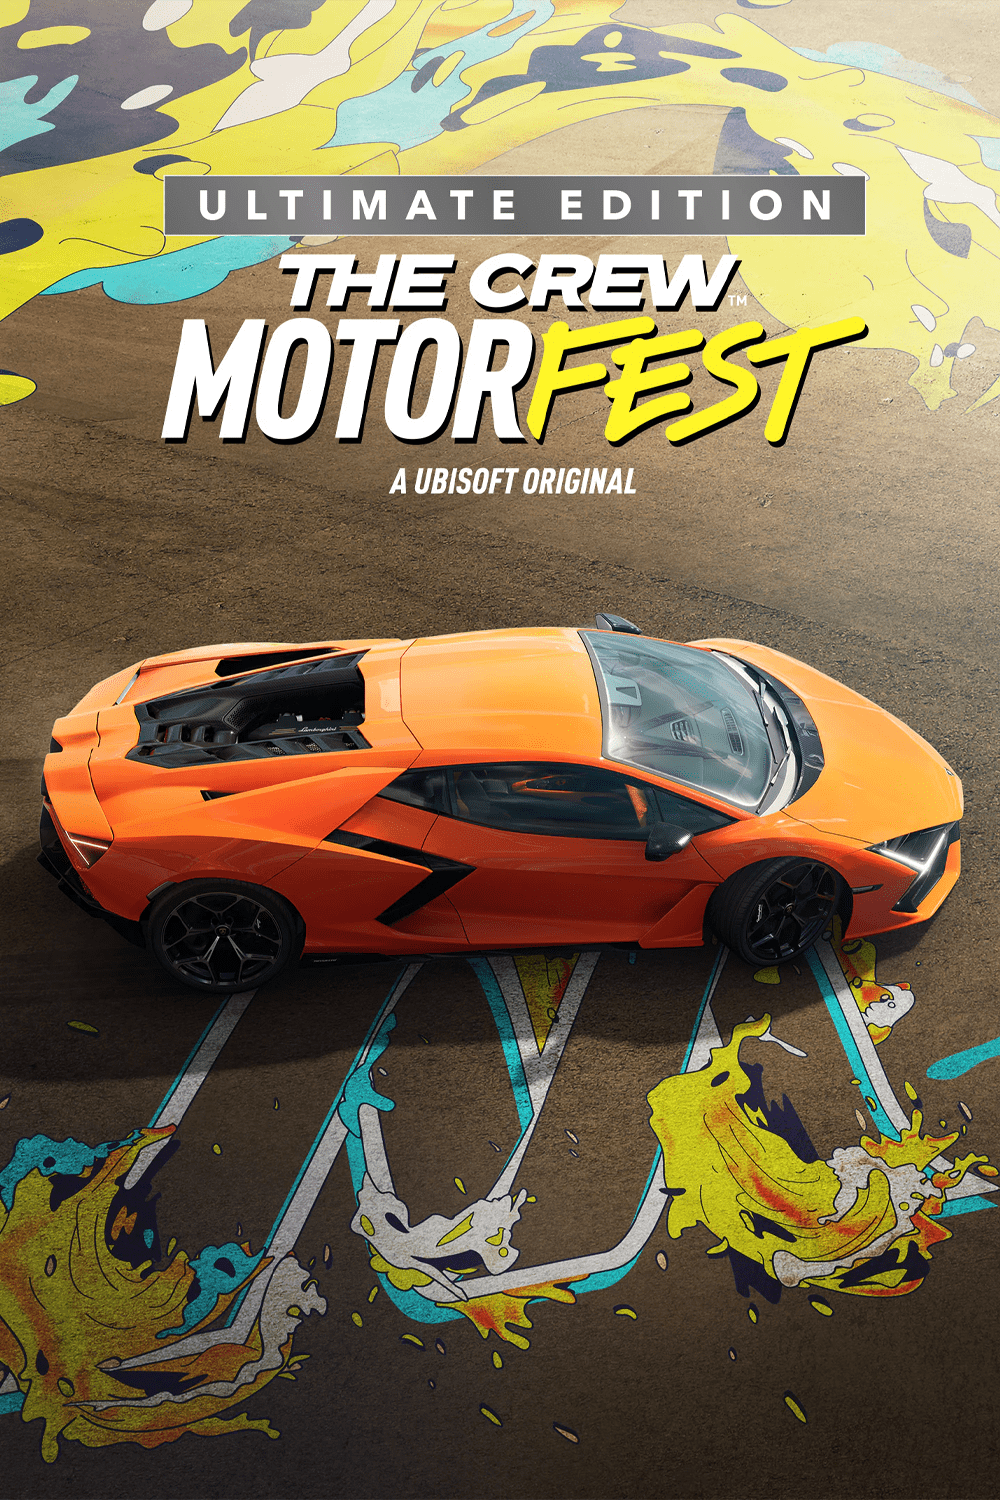 The Crew Motorfest released